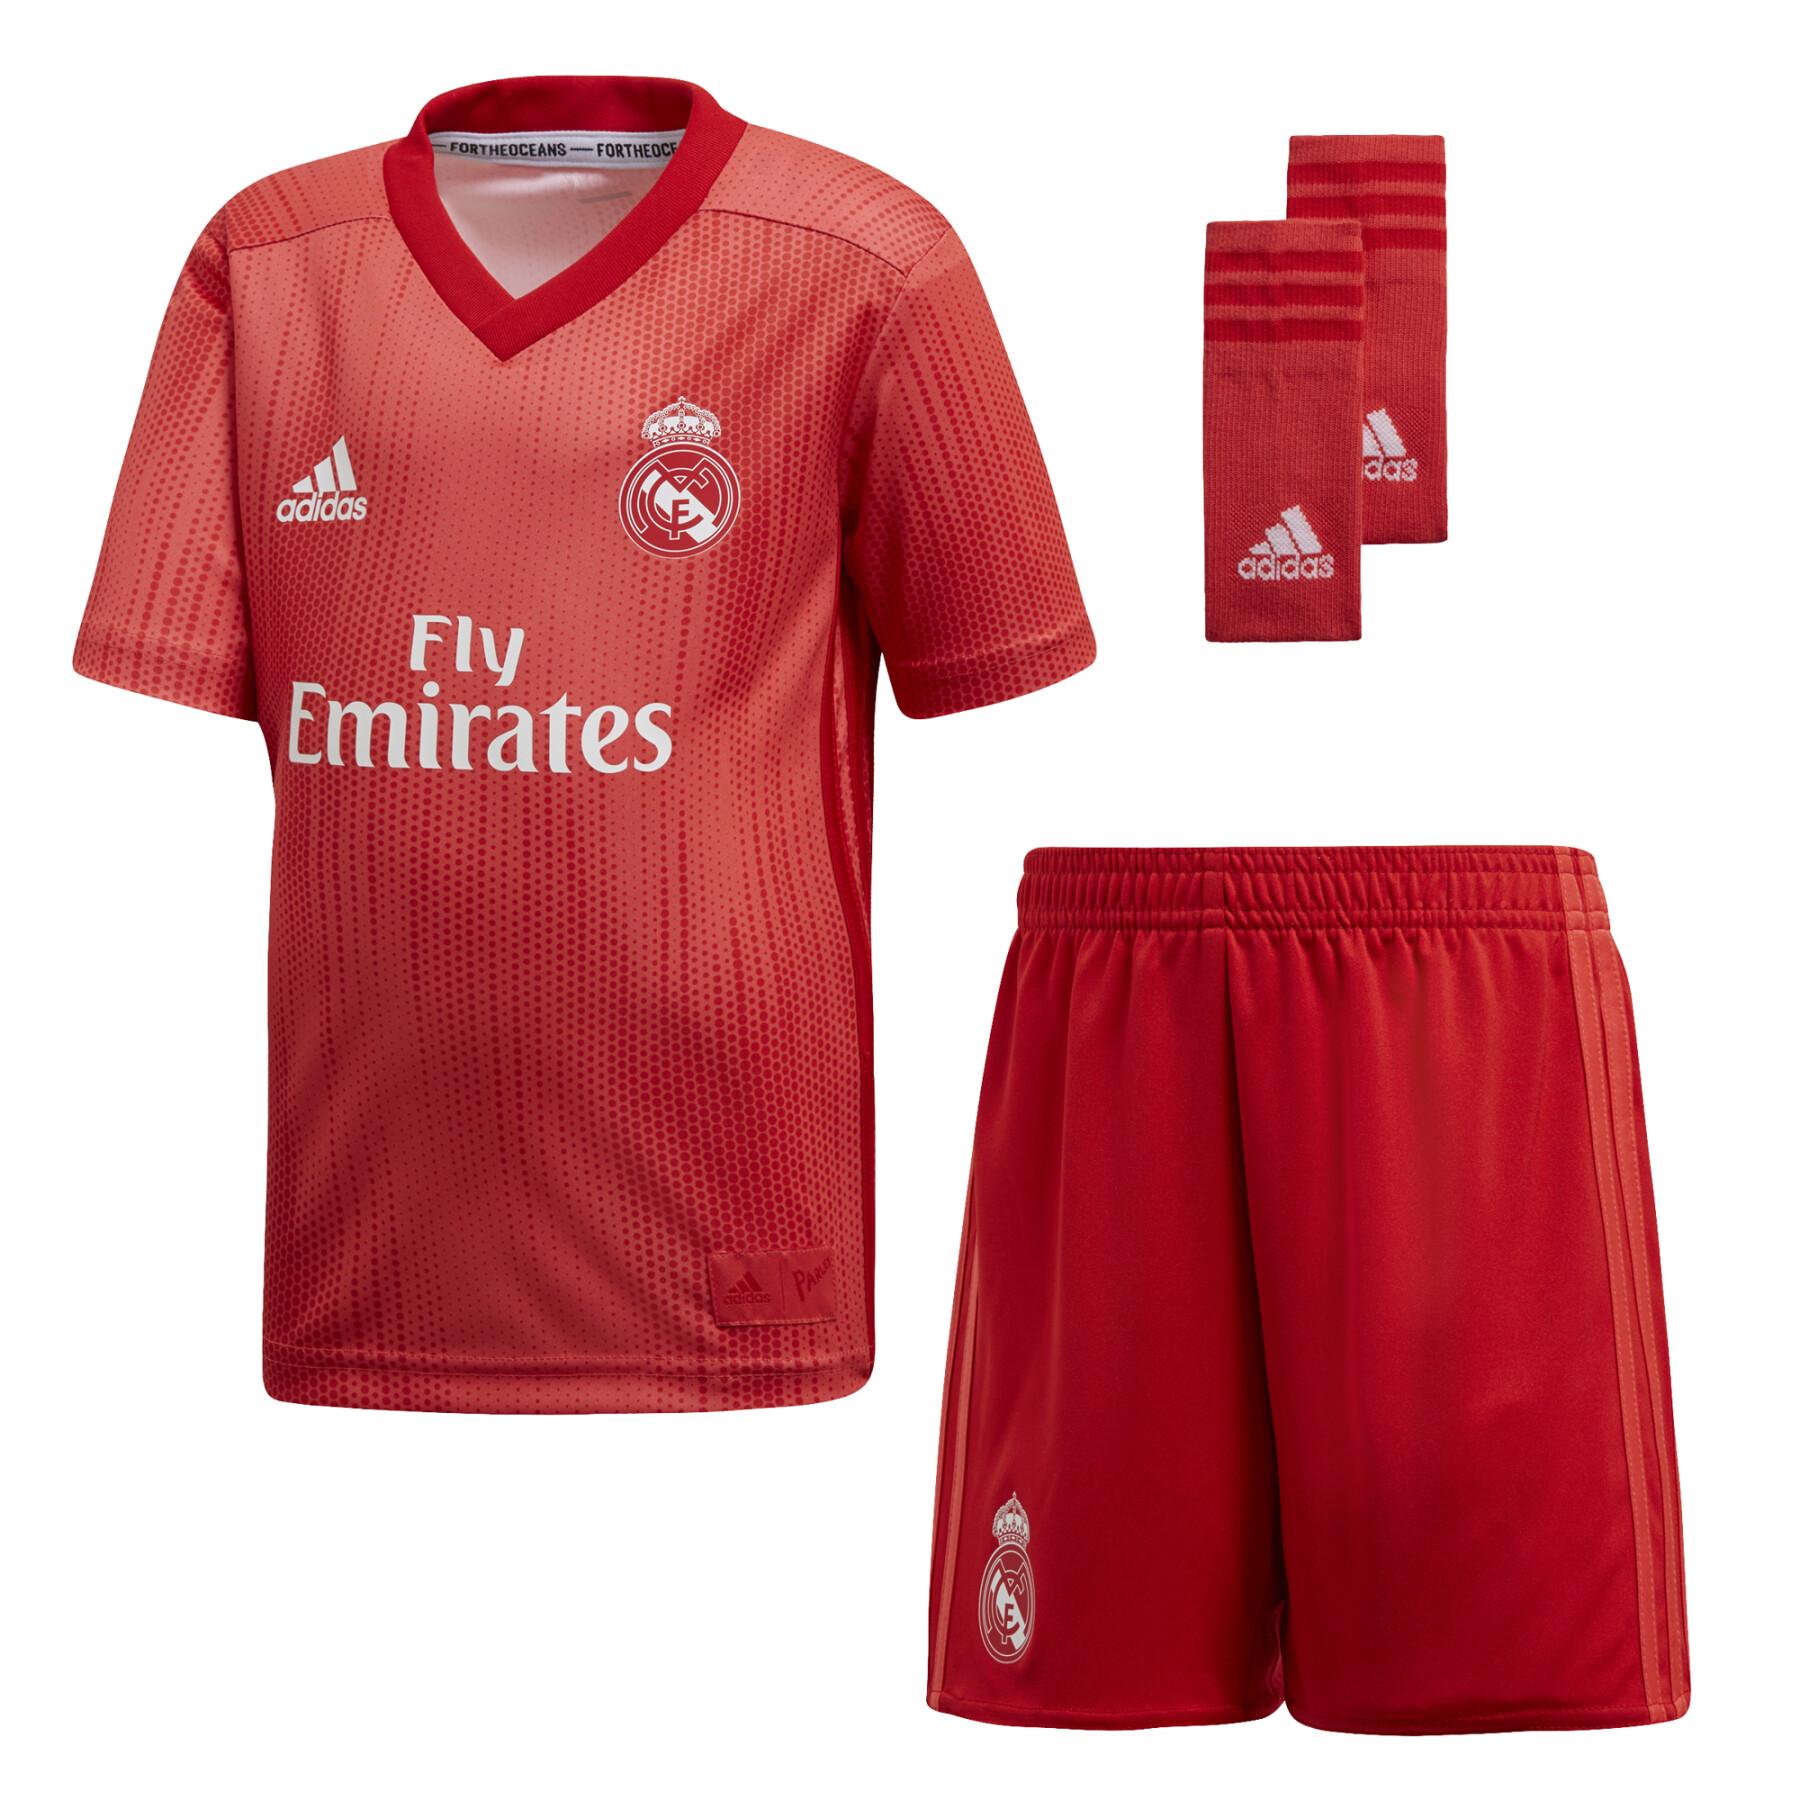 Mini kit third Real Madrid 2018/19